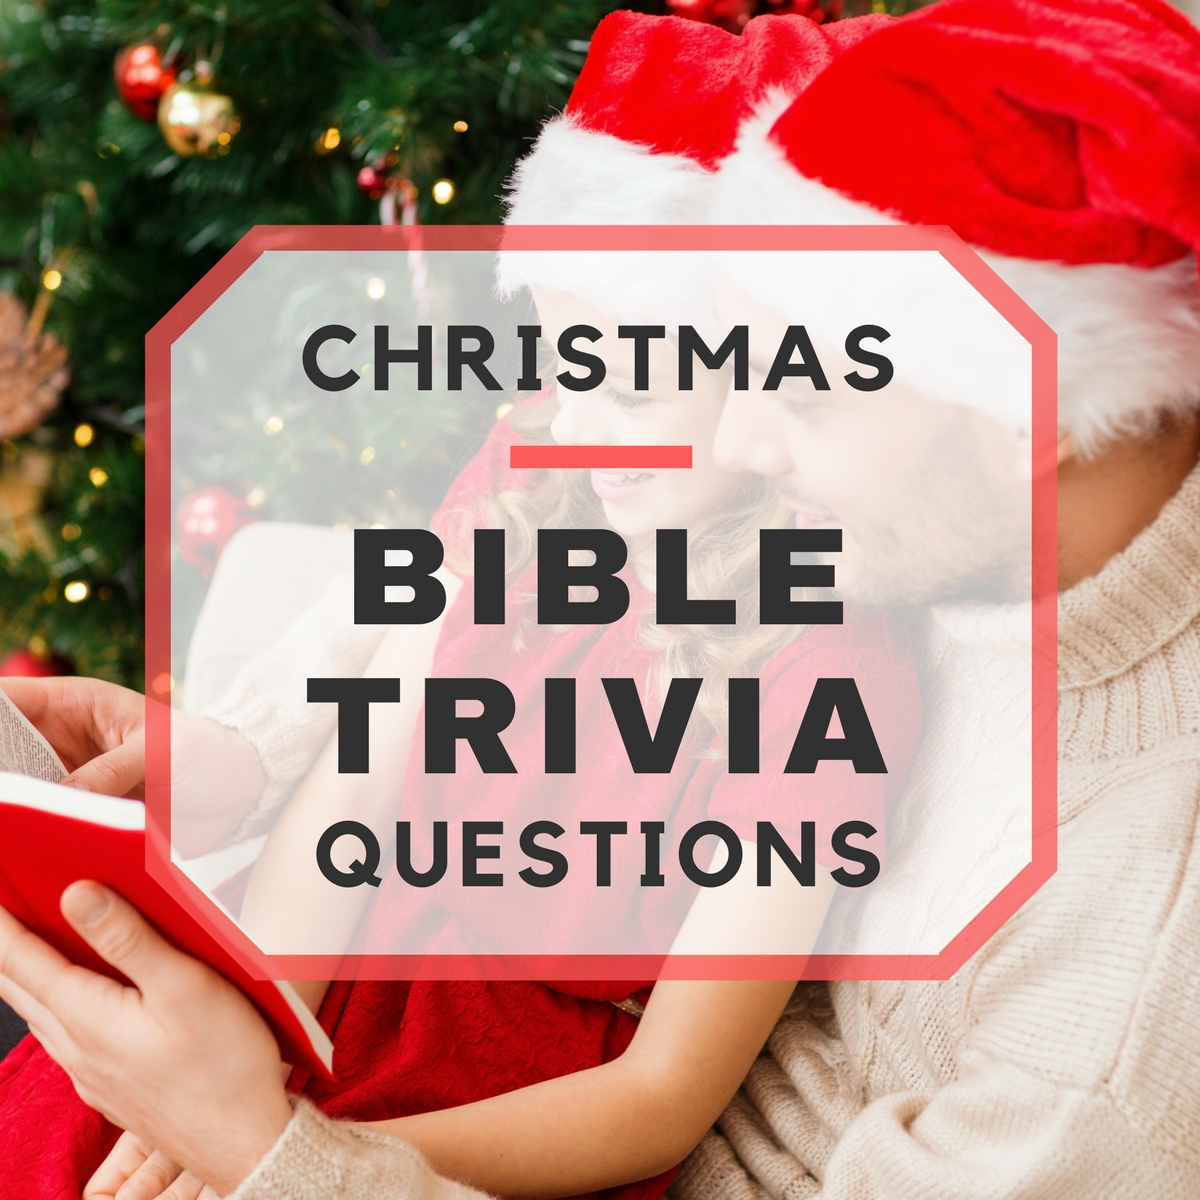 20 Fun Christmas Bible Trivia Questions - Free Printable Bible Trivia Questions And Answers